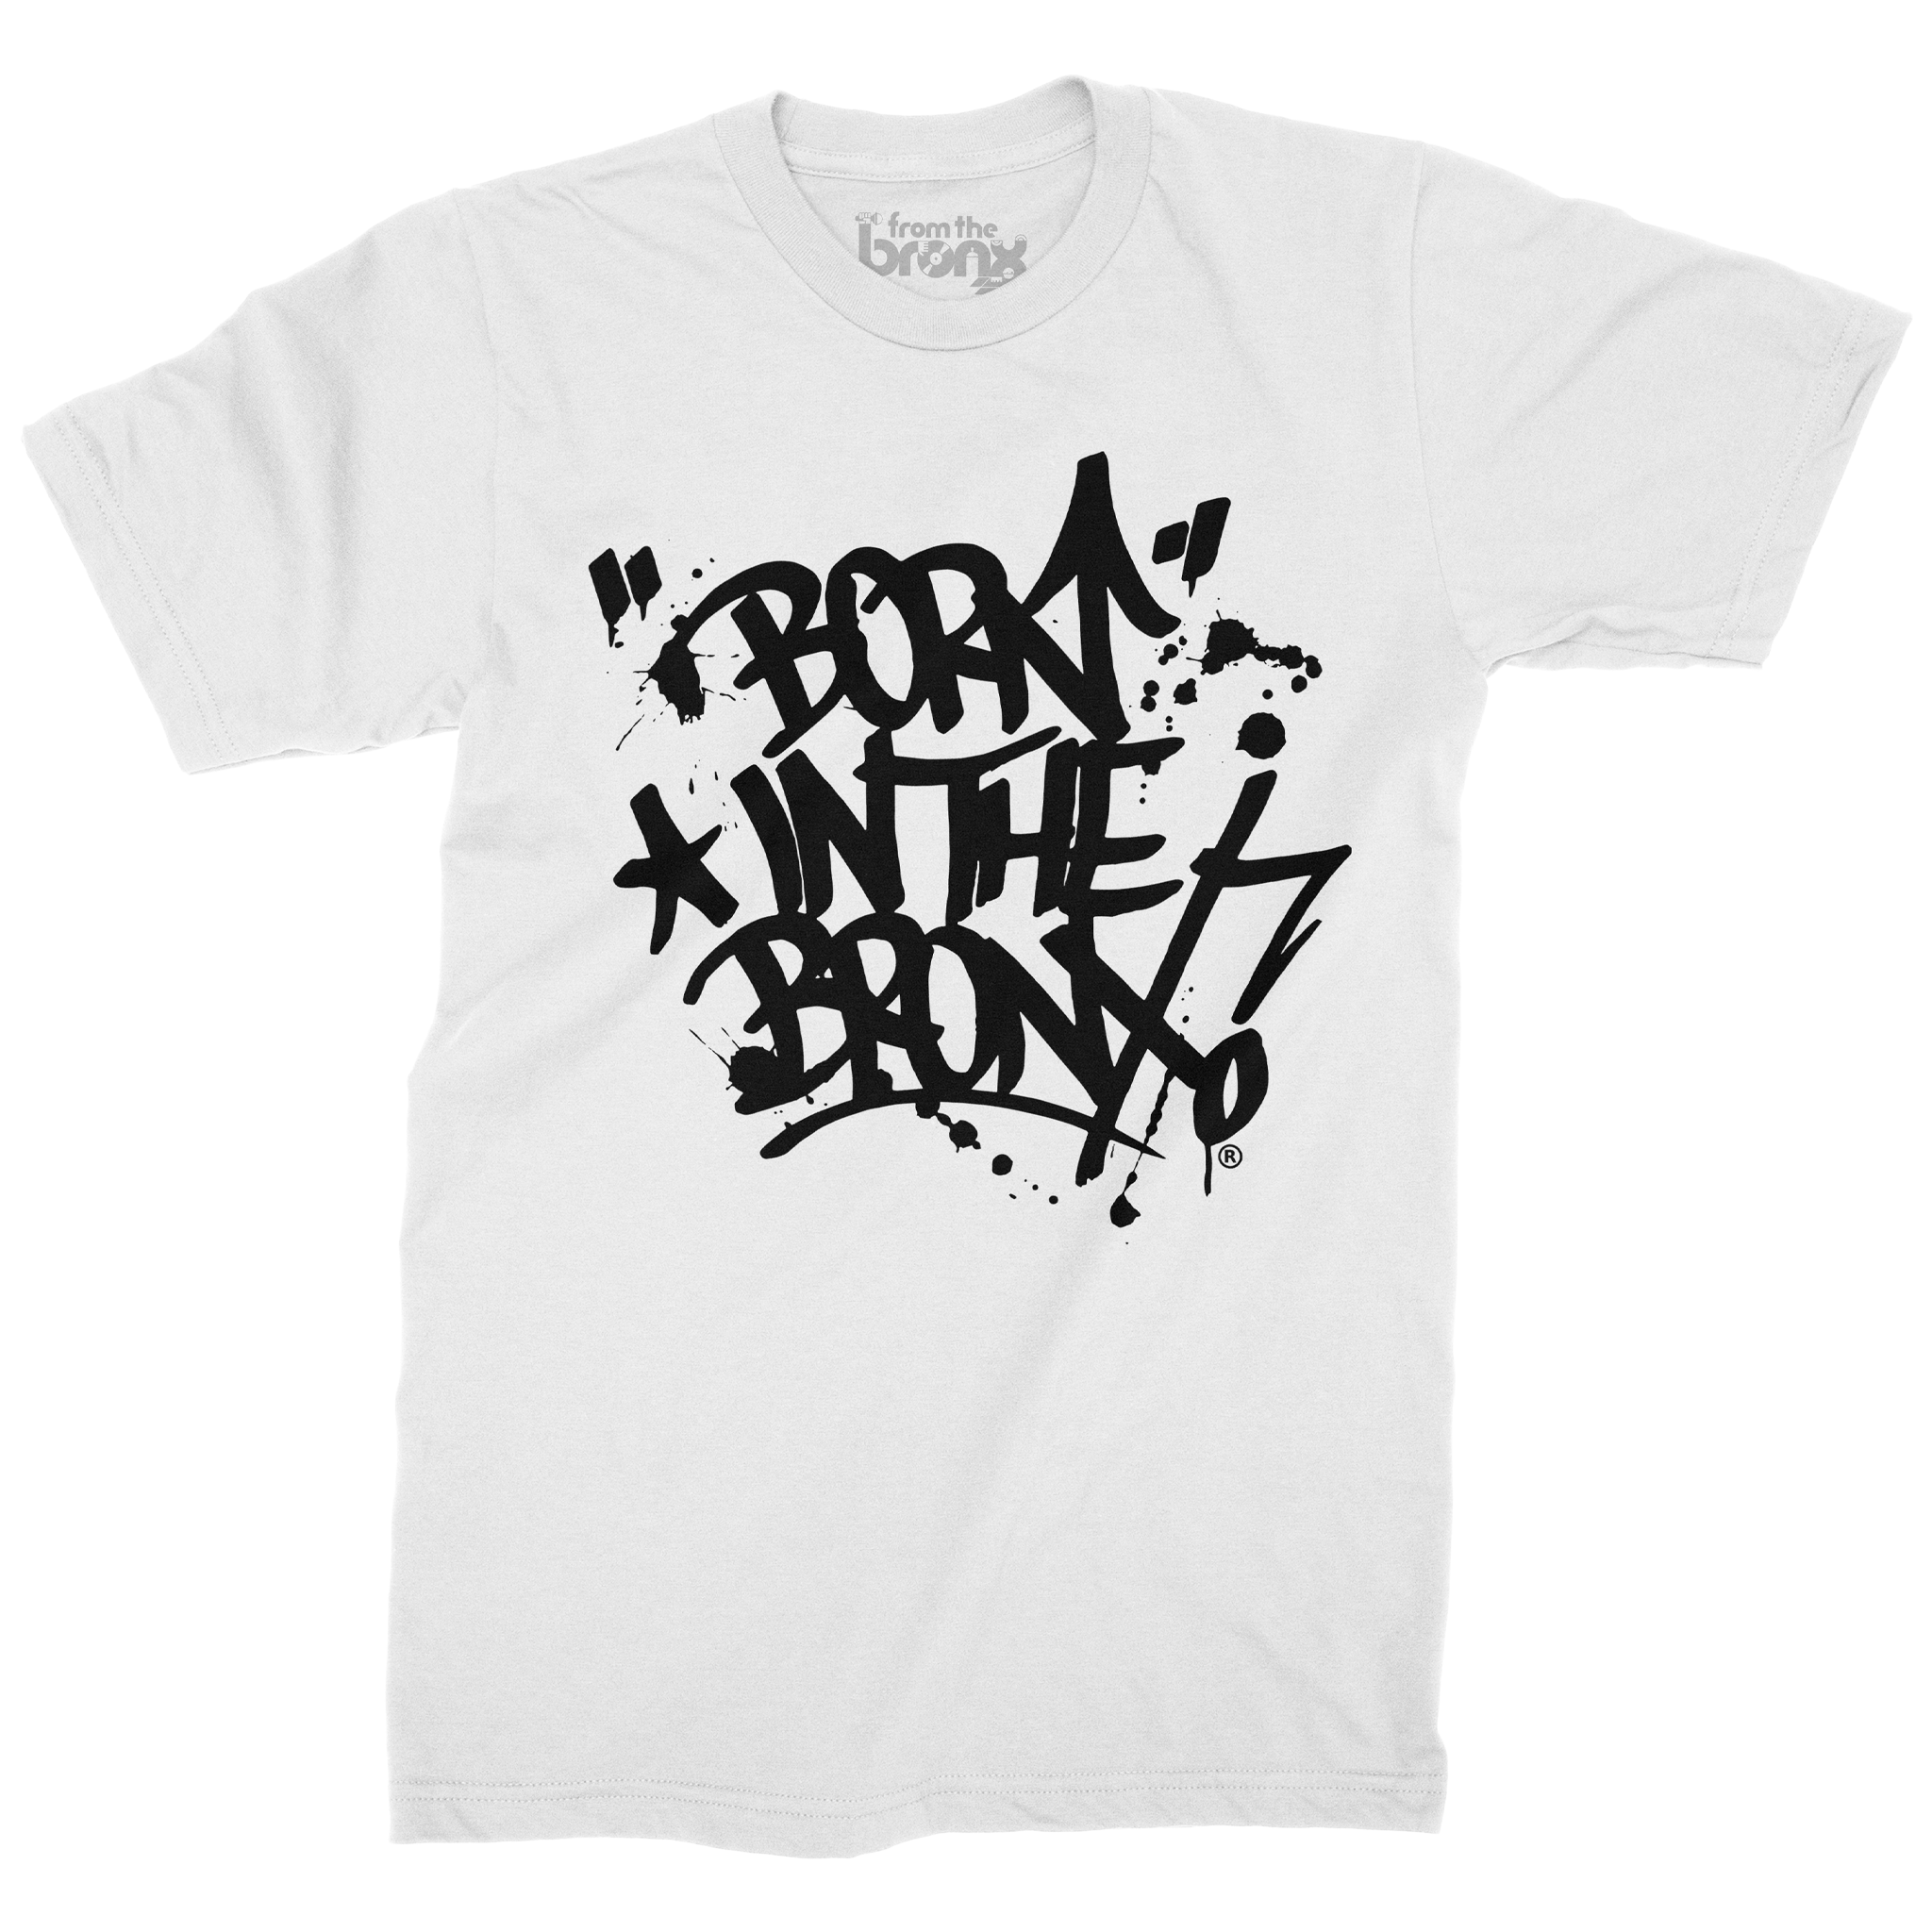 "Born" in The Bronx! Paint Splatter T-Shirt Front in Black on White